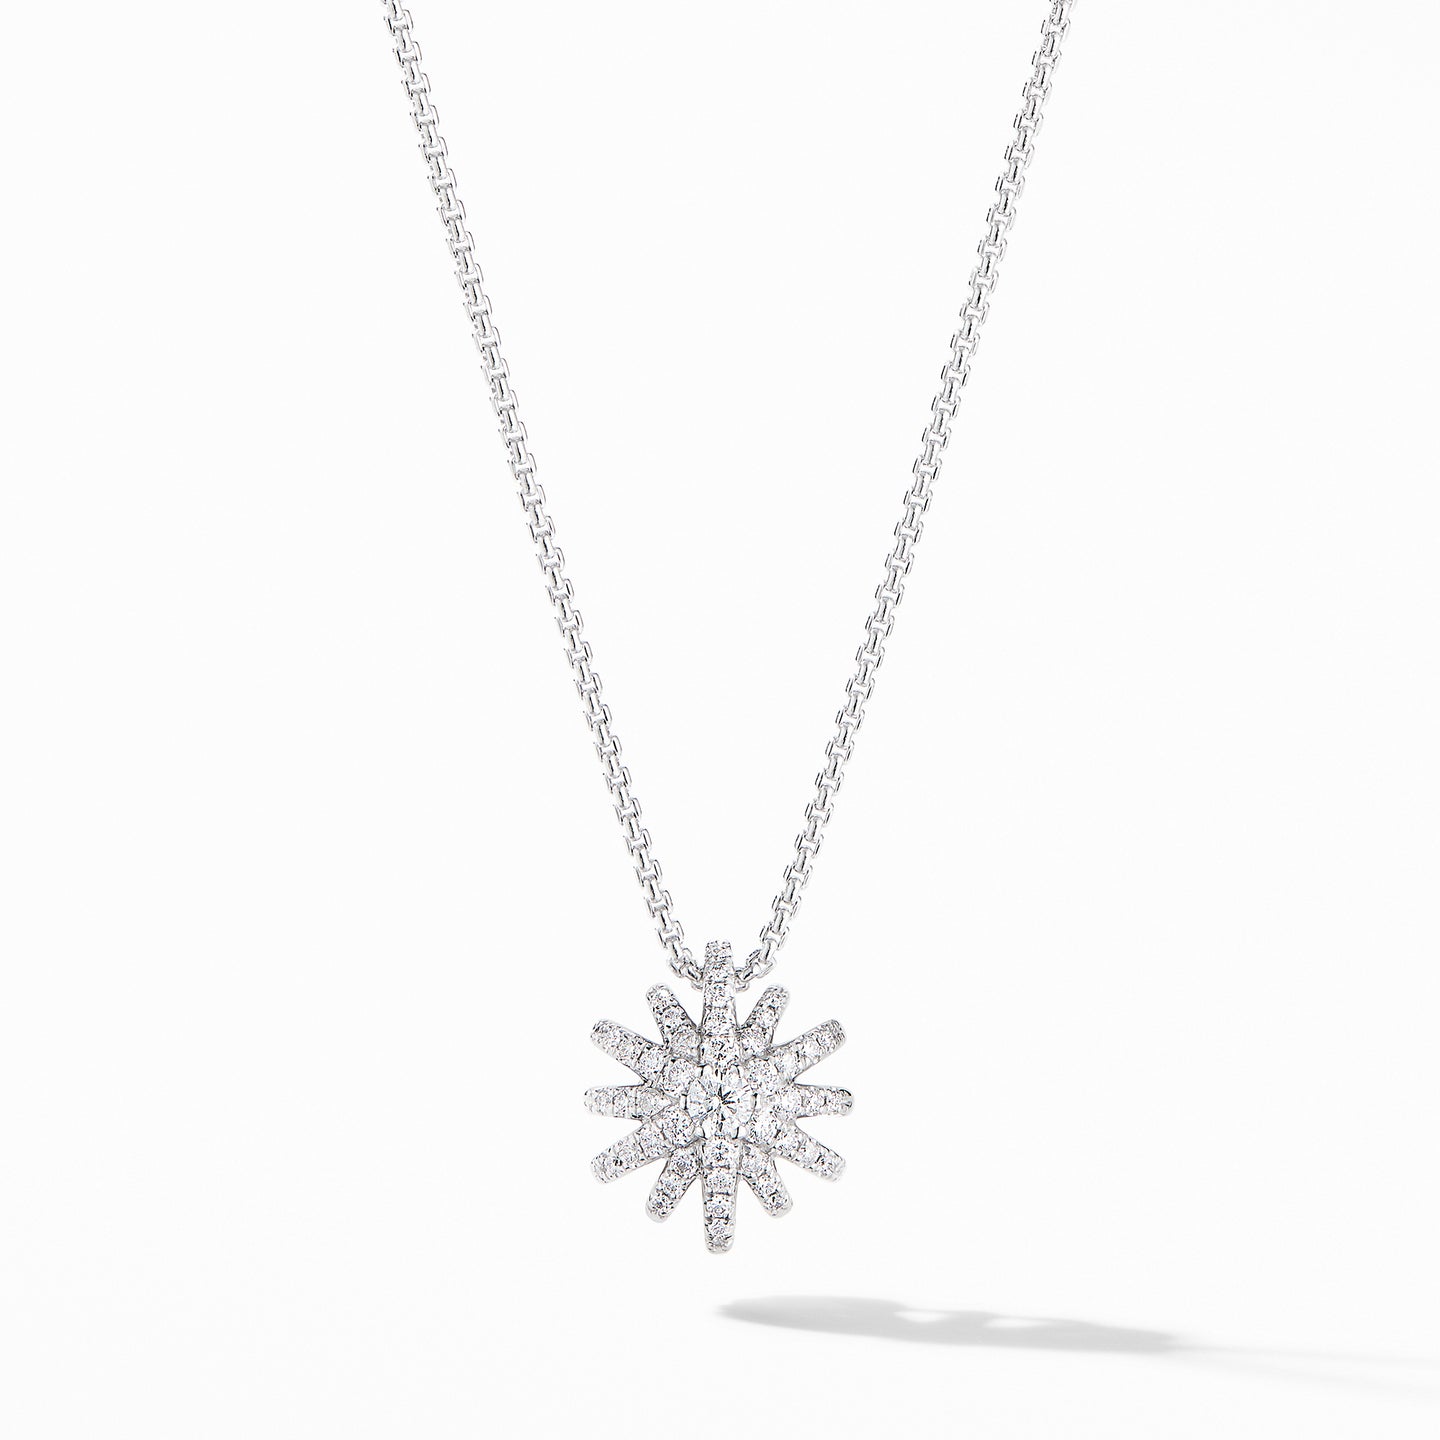 Starburst Pendant Necklace in 18K White Gold with Pavé Diamonds, 17